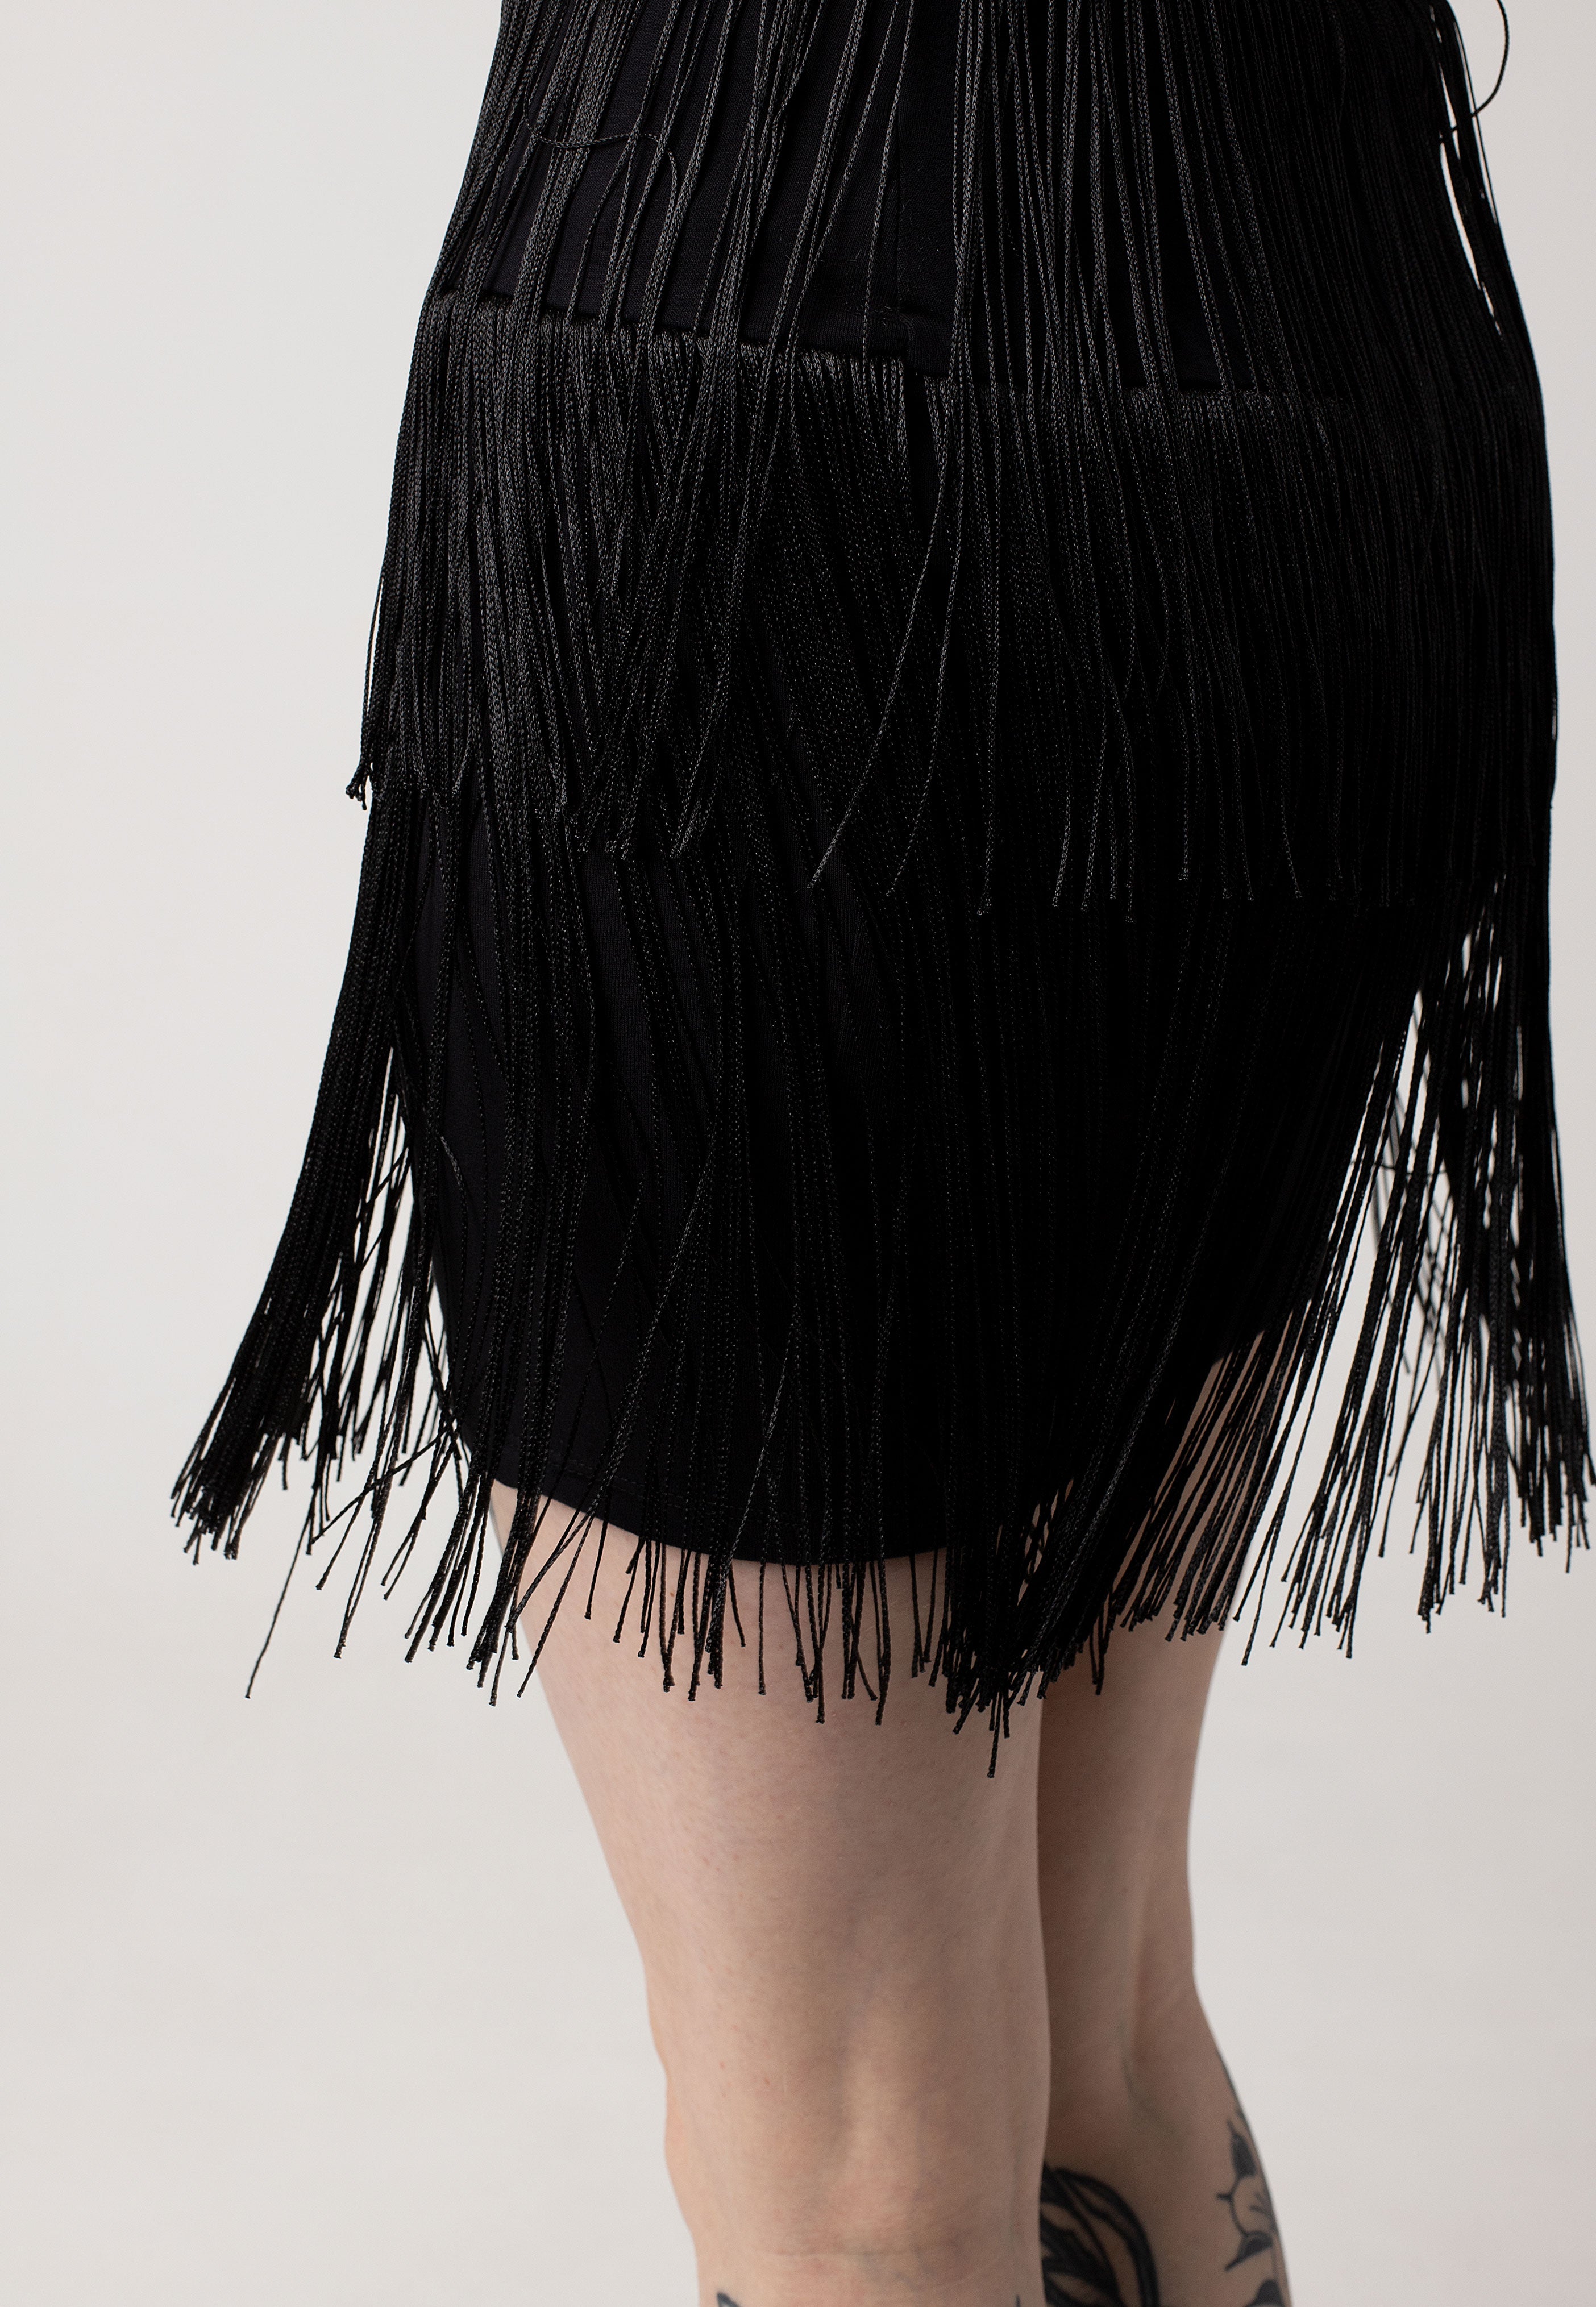 Noisy May - Dallas Black Fringes - Skirt